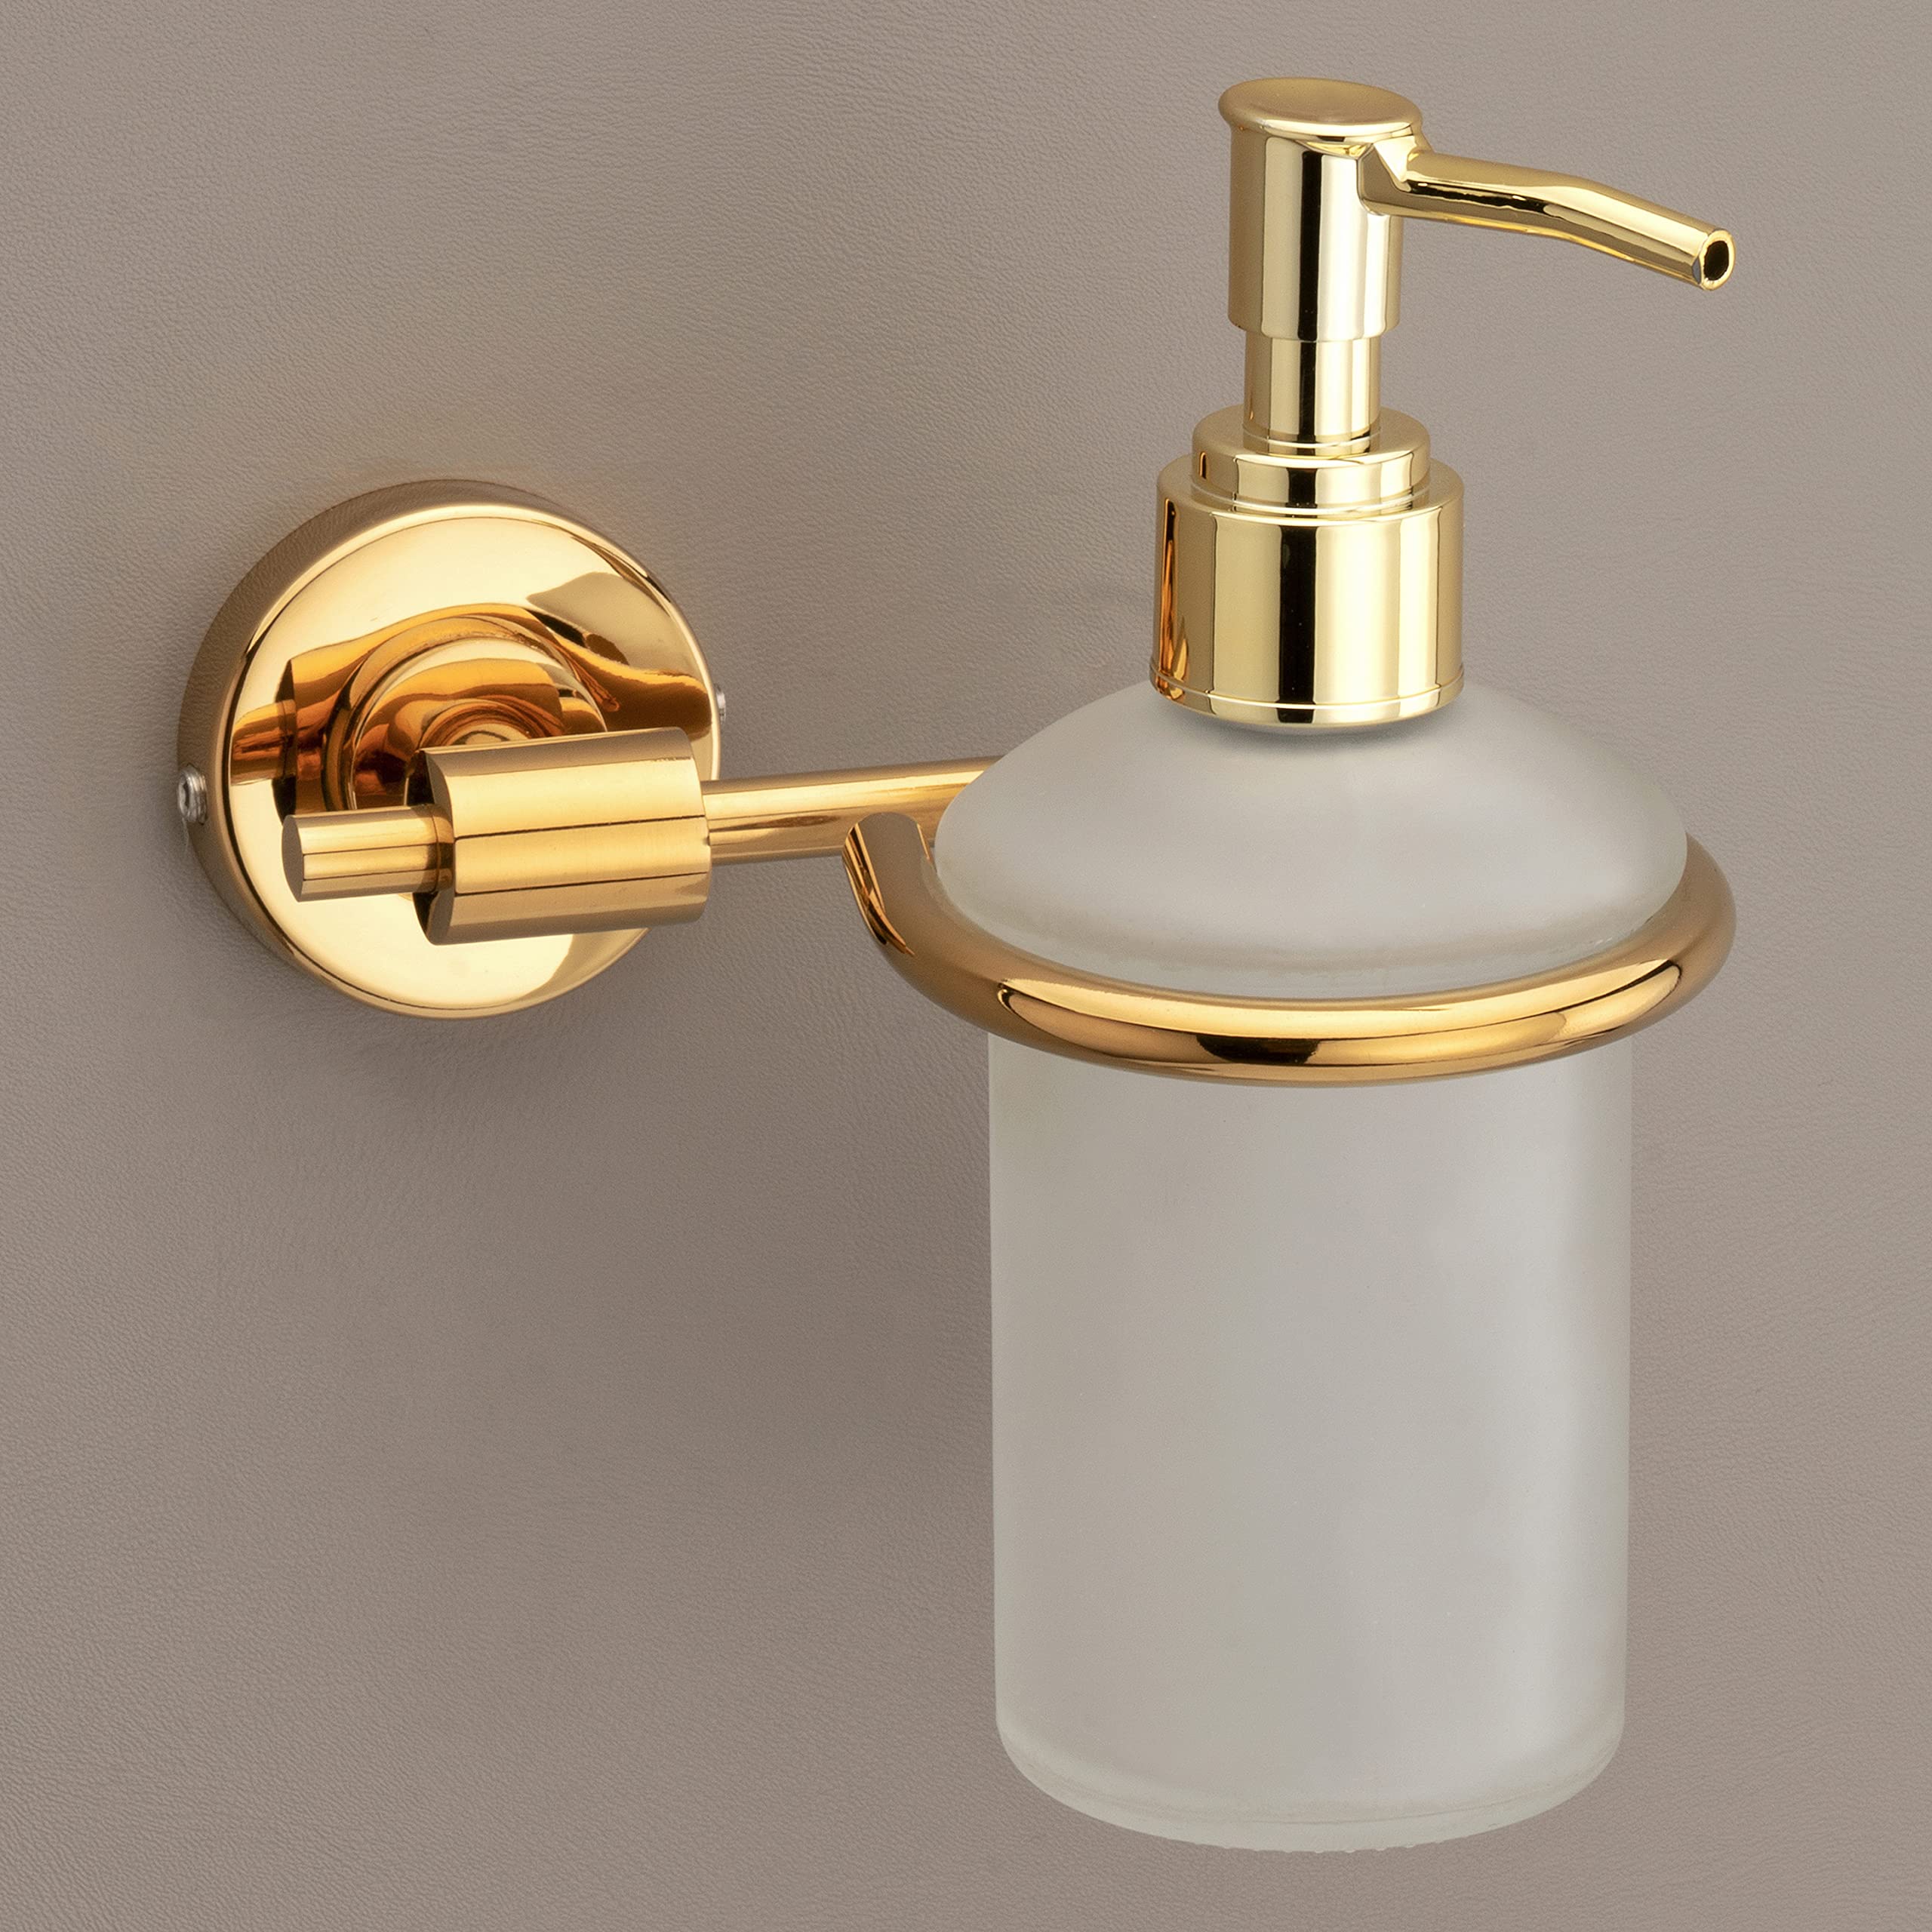 Plantex 304 Grade Stainless Steel Daizy Liquid Soap Dispenser/Shampoo Dispenser/Hand Wash Dispenser/Bathroom Accessories - Pack of 2 (APS-952 - PVD Gold)